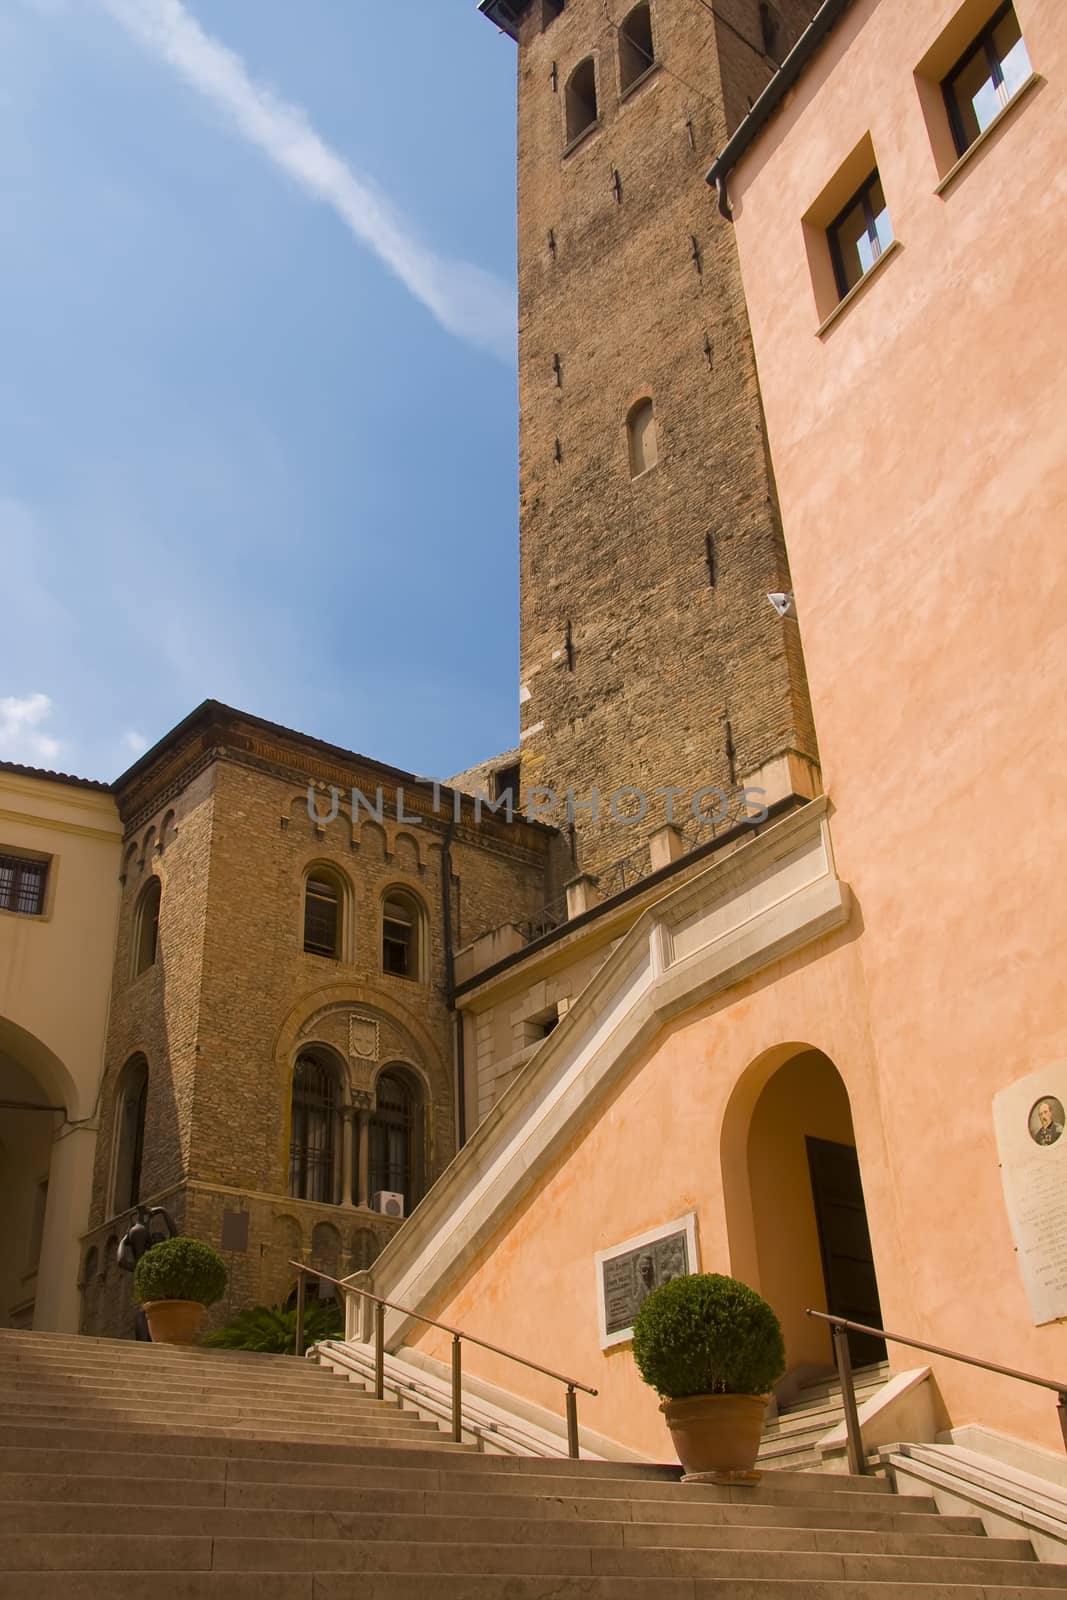 Old historic buildings in Padua Italy  by fotoecho